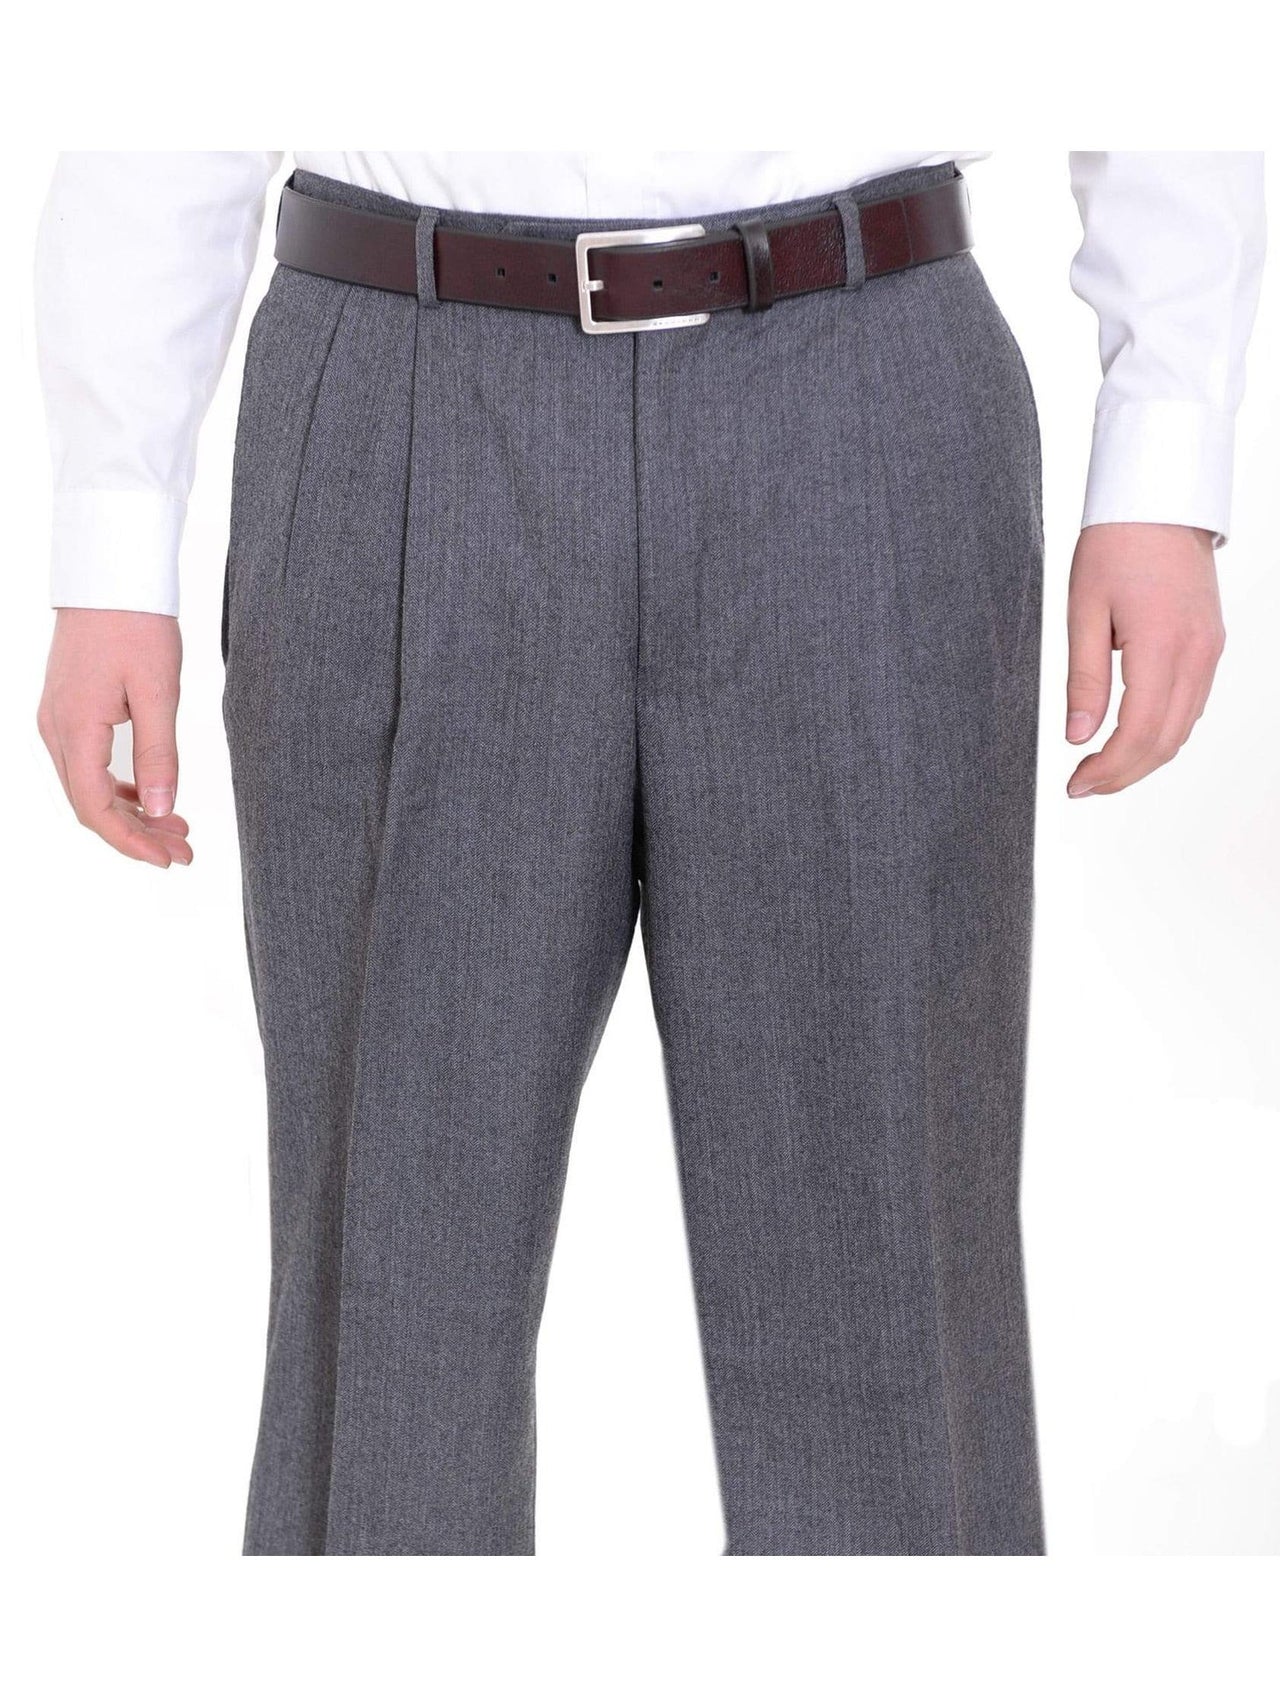 Nautica Sale Pants 30X30 Nautica Regular Fit Gray Herringbone Pleated Wool Dress Pants